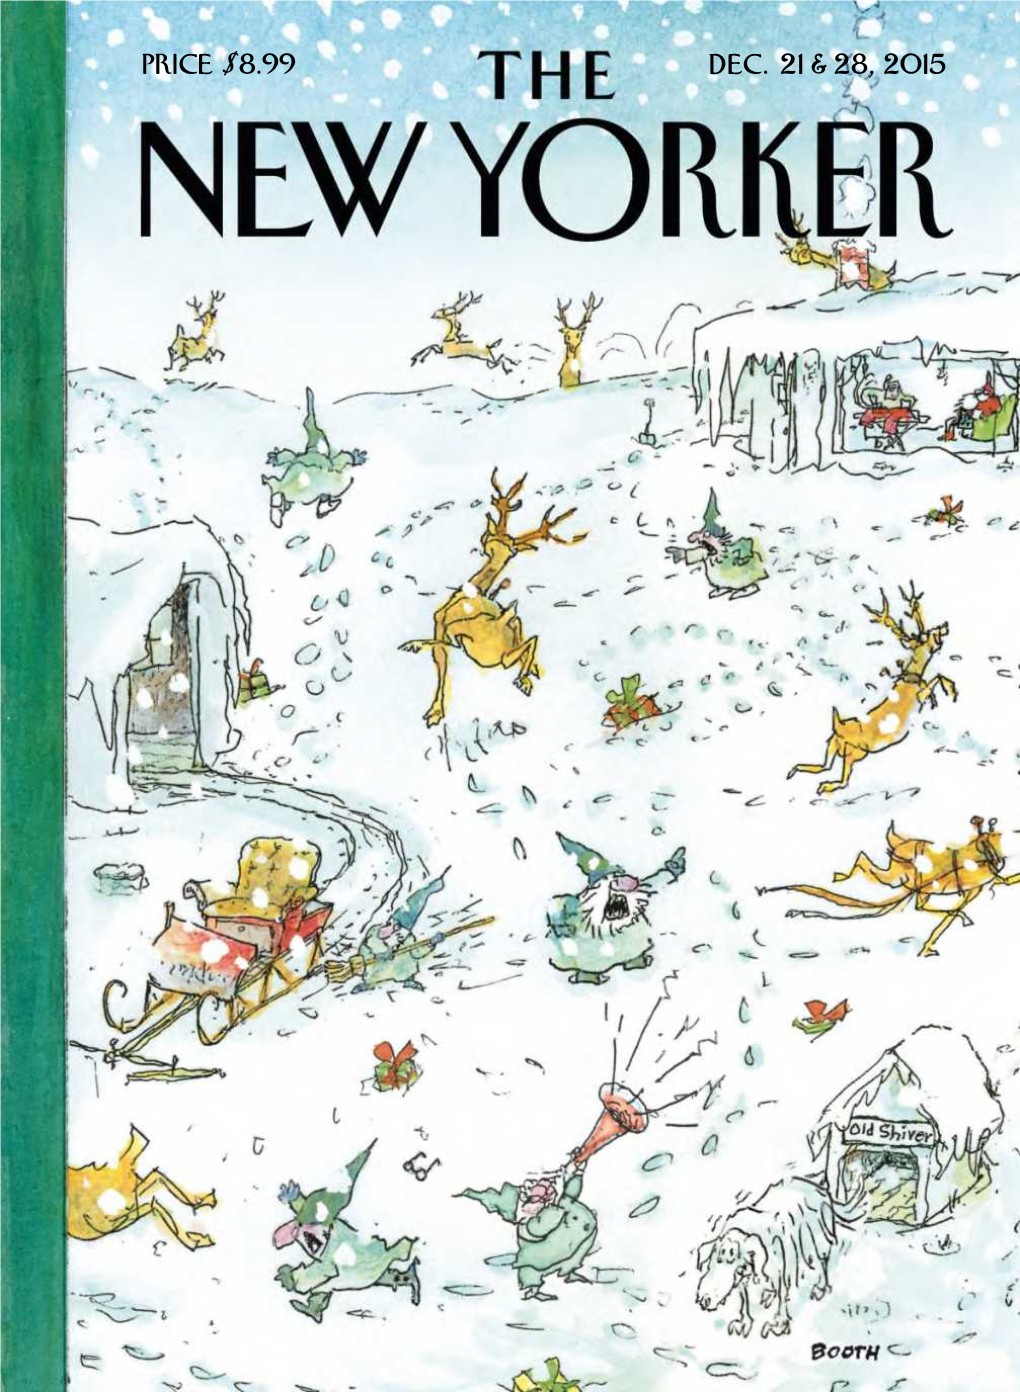 The New Yorker, December 21 & 28, 2015